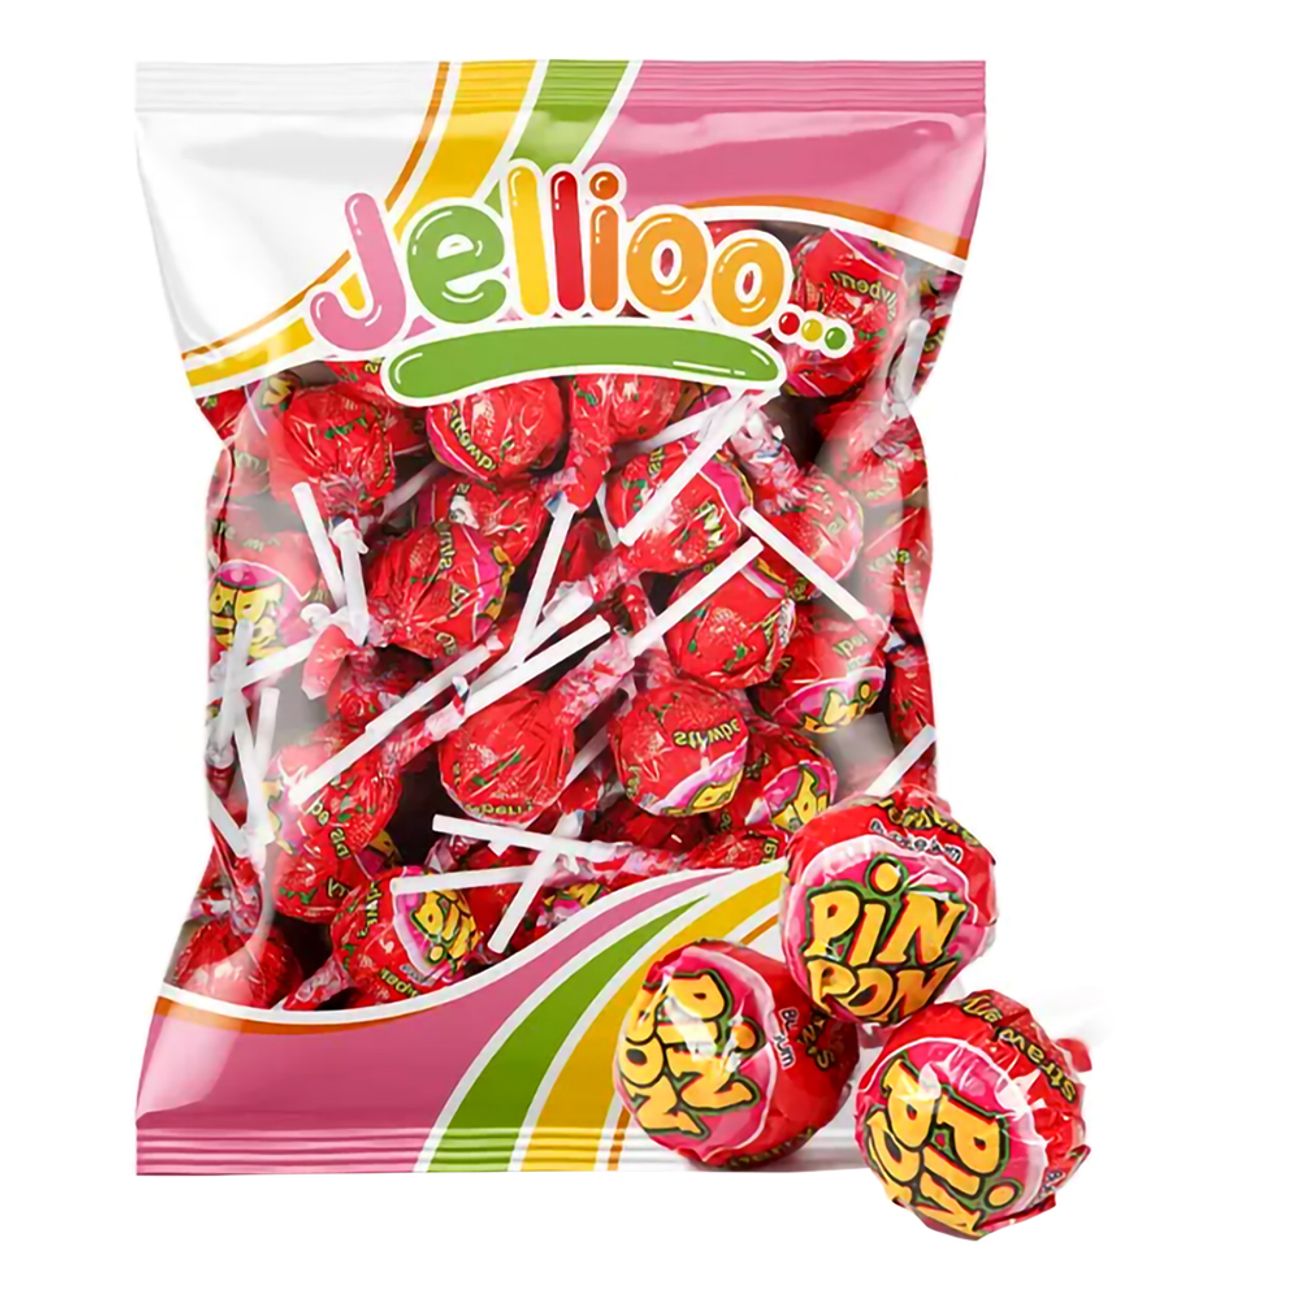 pin-pon-lollipop-gum-sour-strawberry-storpack-103125-1